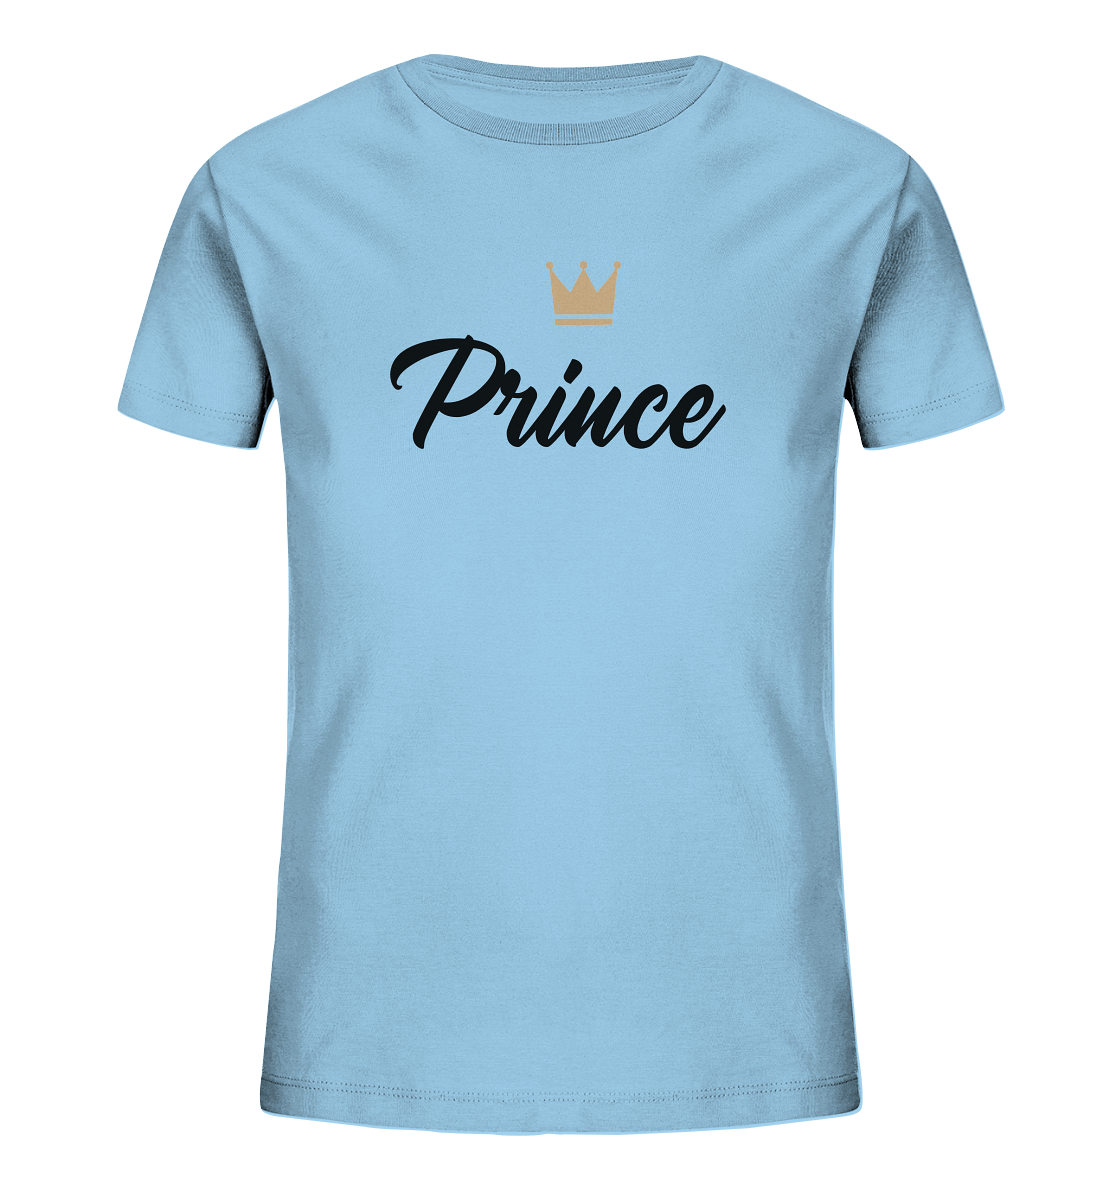 Prince T-Shirt Familienoutfit Set King Queen Prince